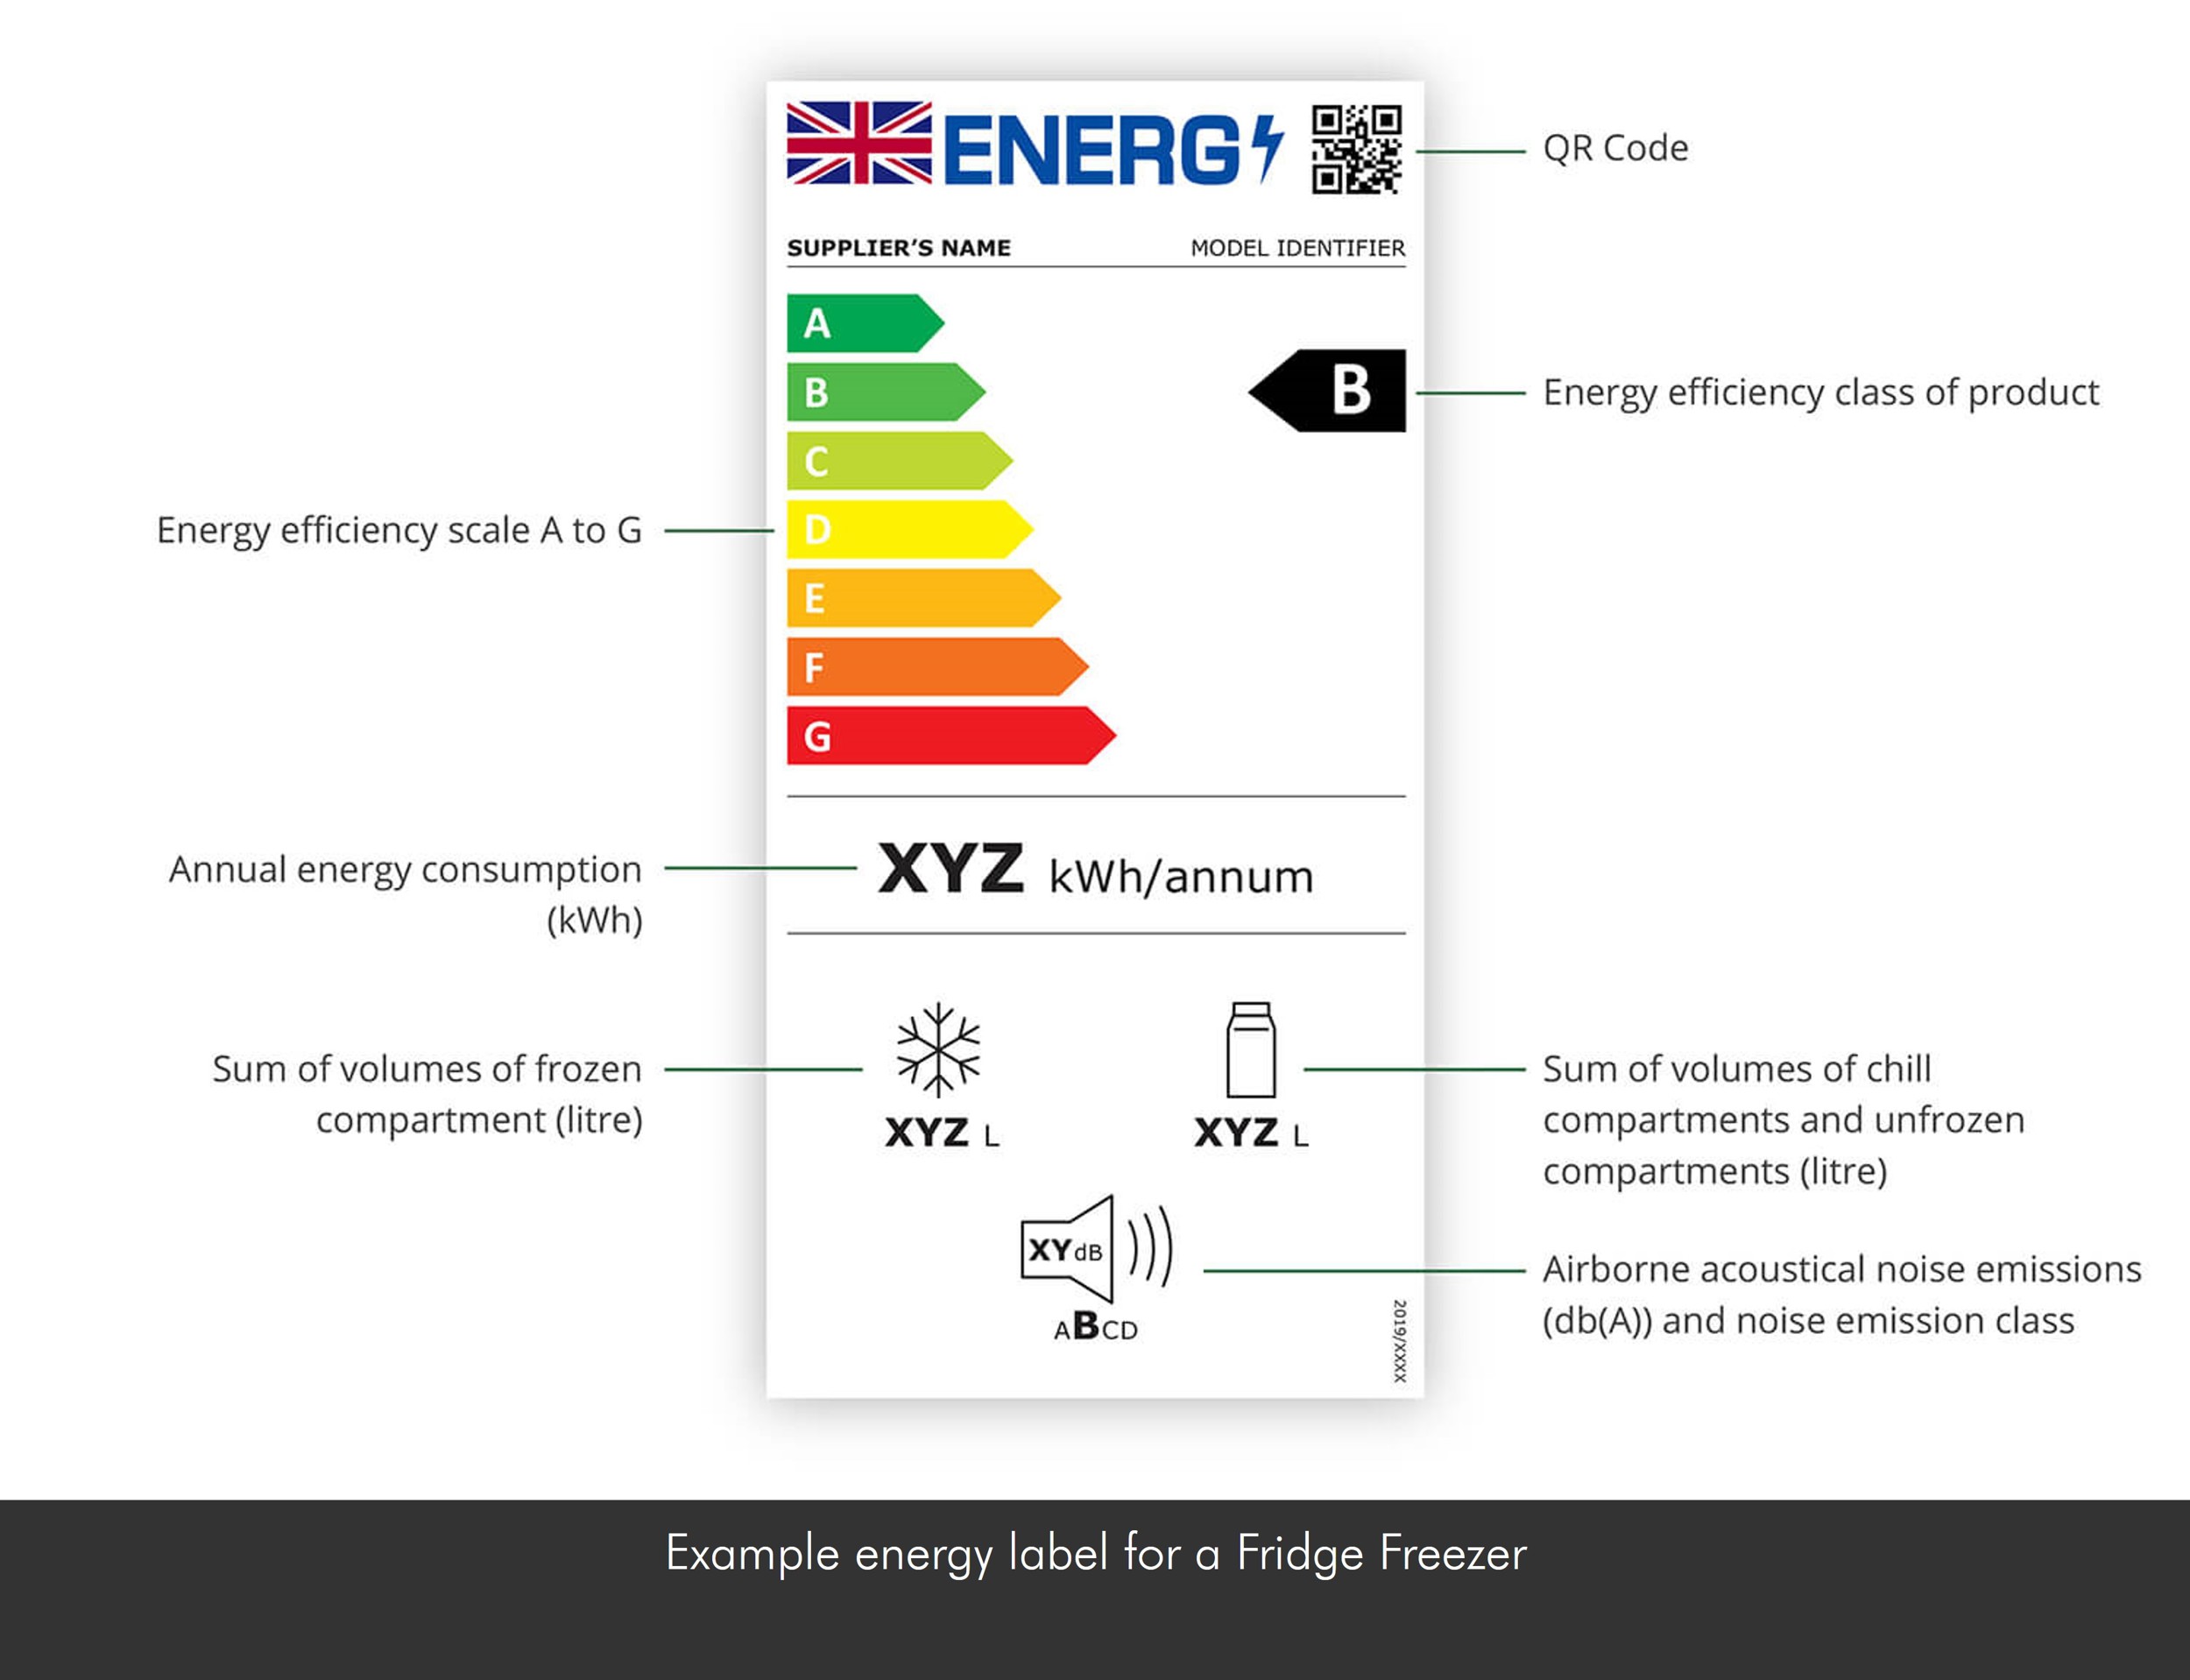 Example energy label for a Fridge Freezer.